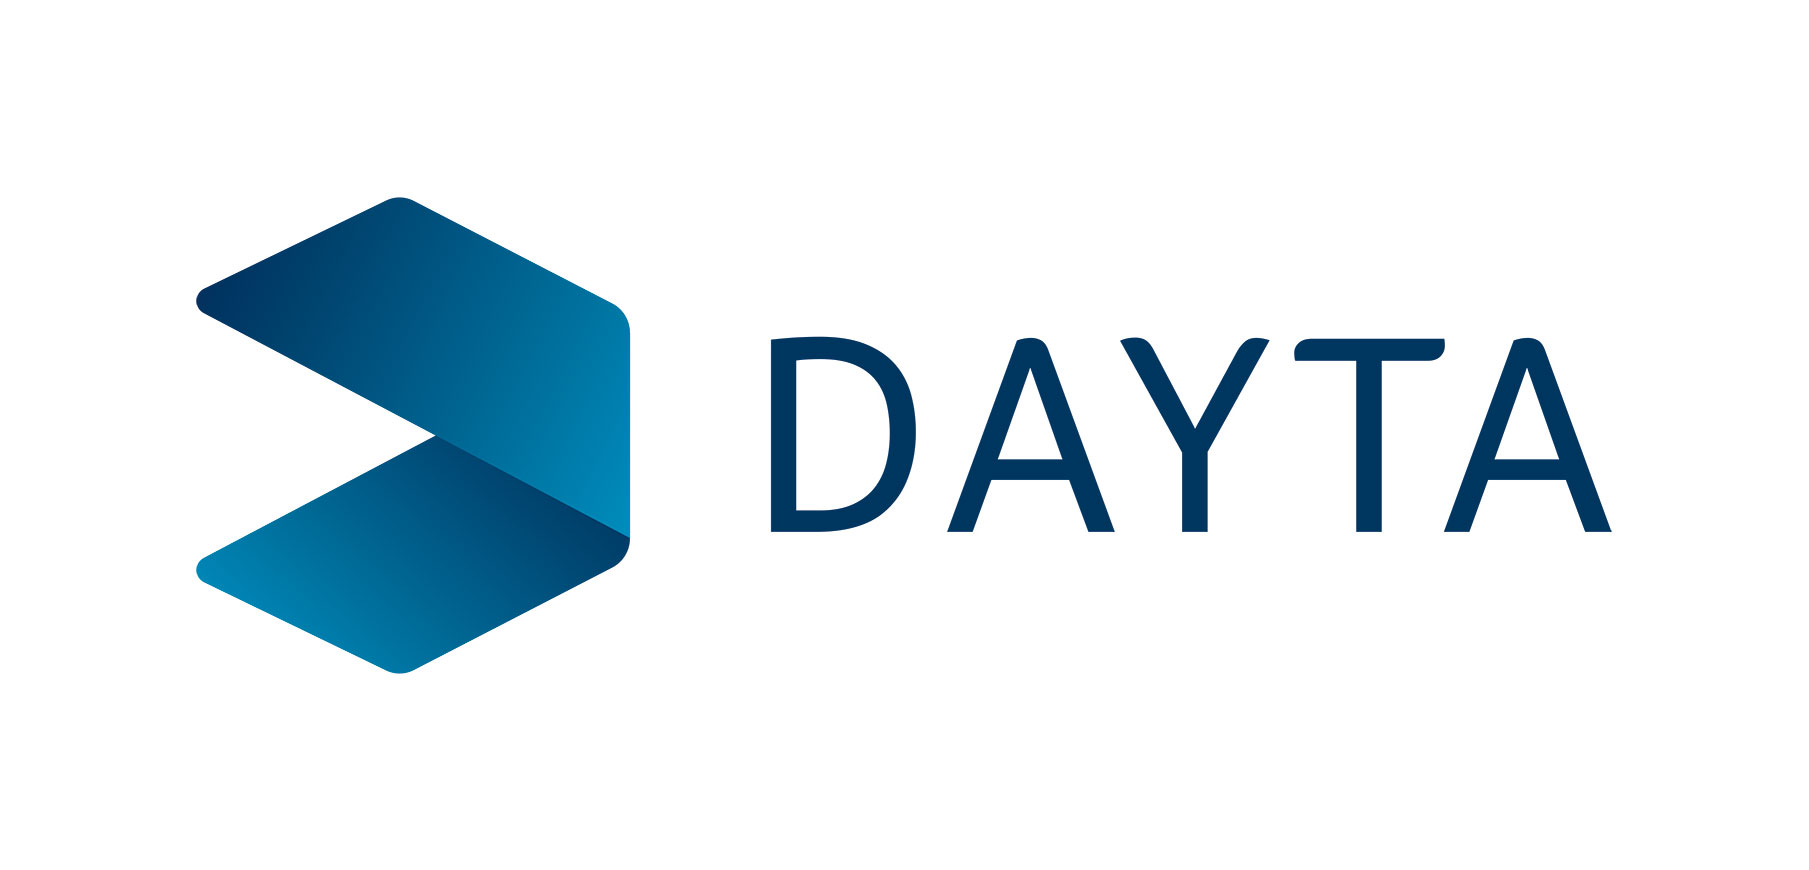 Dayta-logo-72dpi-plus-exclusion